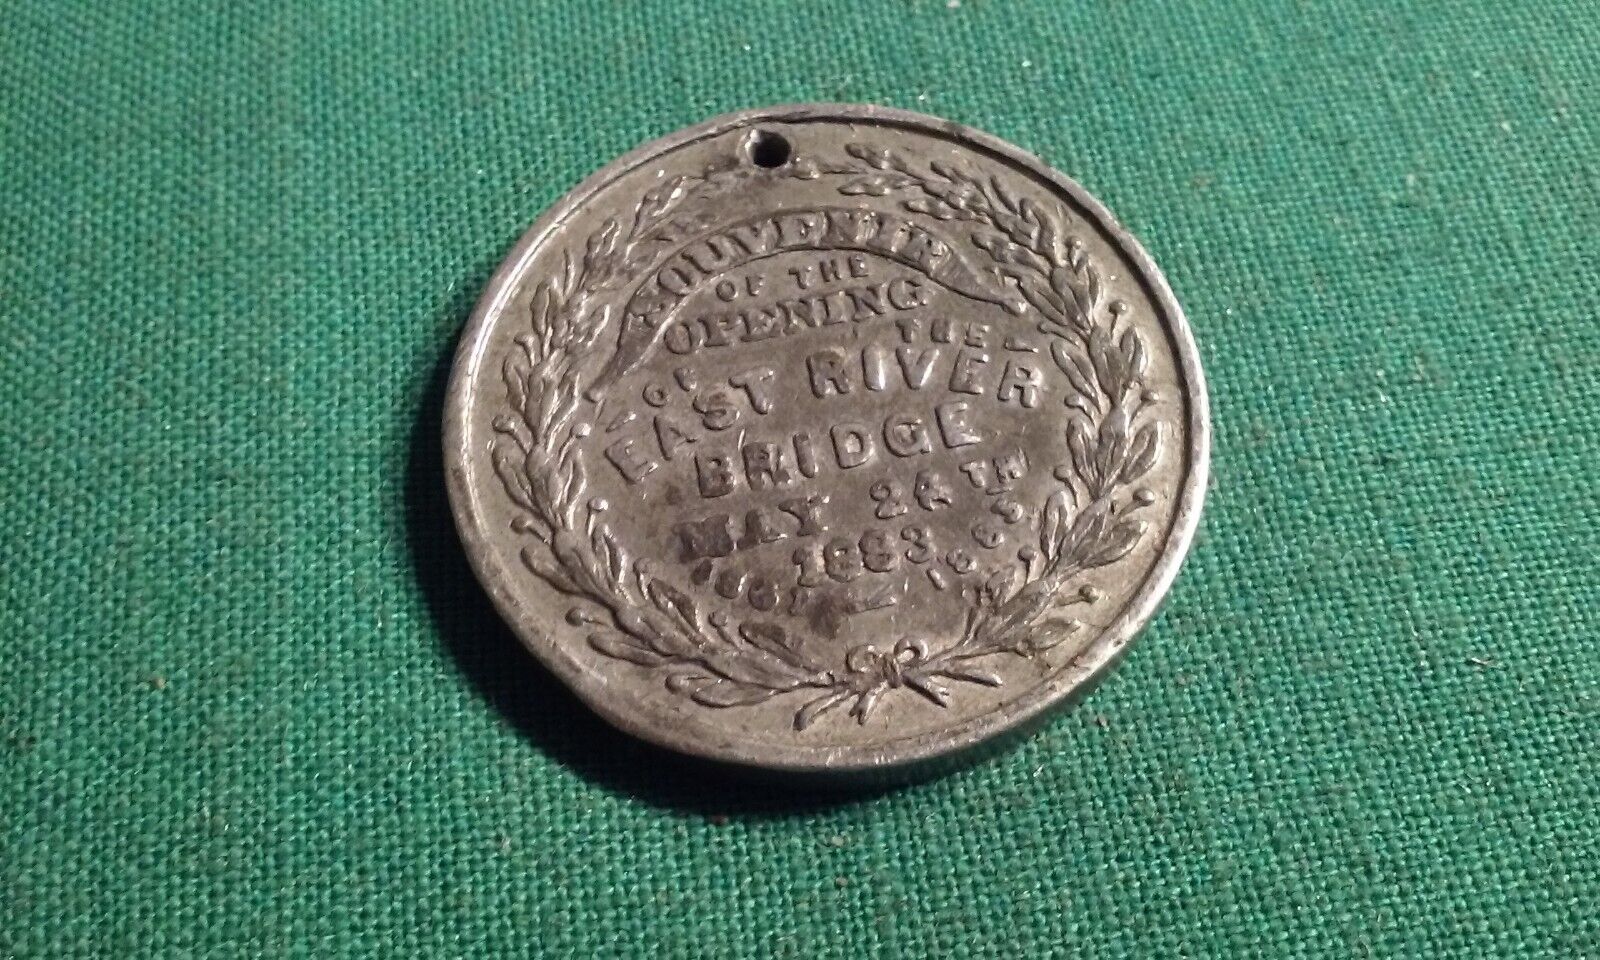 Original Antique 1883 Souvenir Coin Opening of the East River Bridge NYC Rare